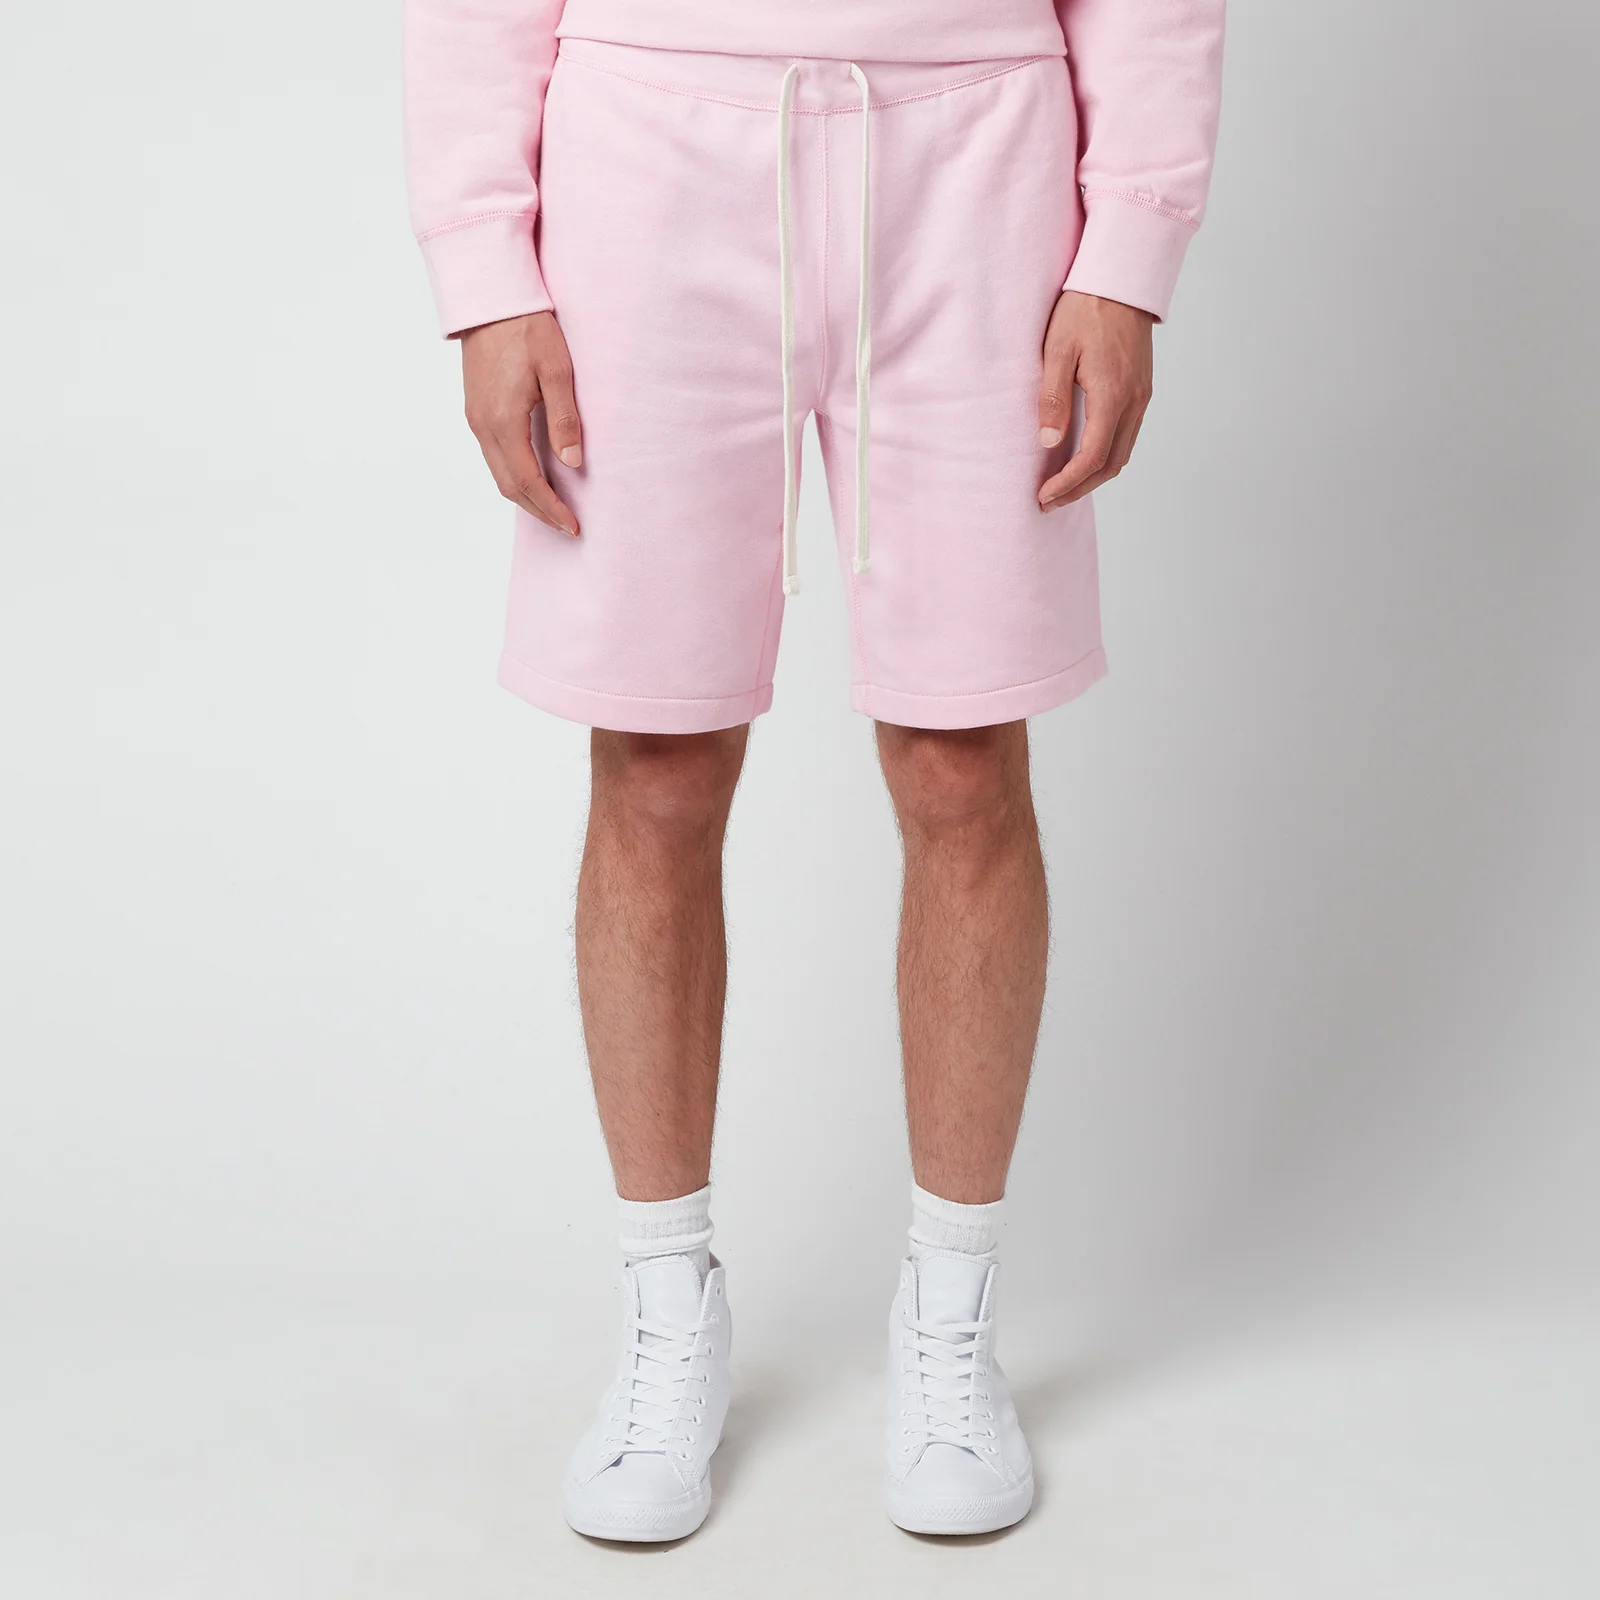 Polo Ralph Lauren Men's Fleece Shorts - Carmel Pink Image 1